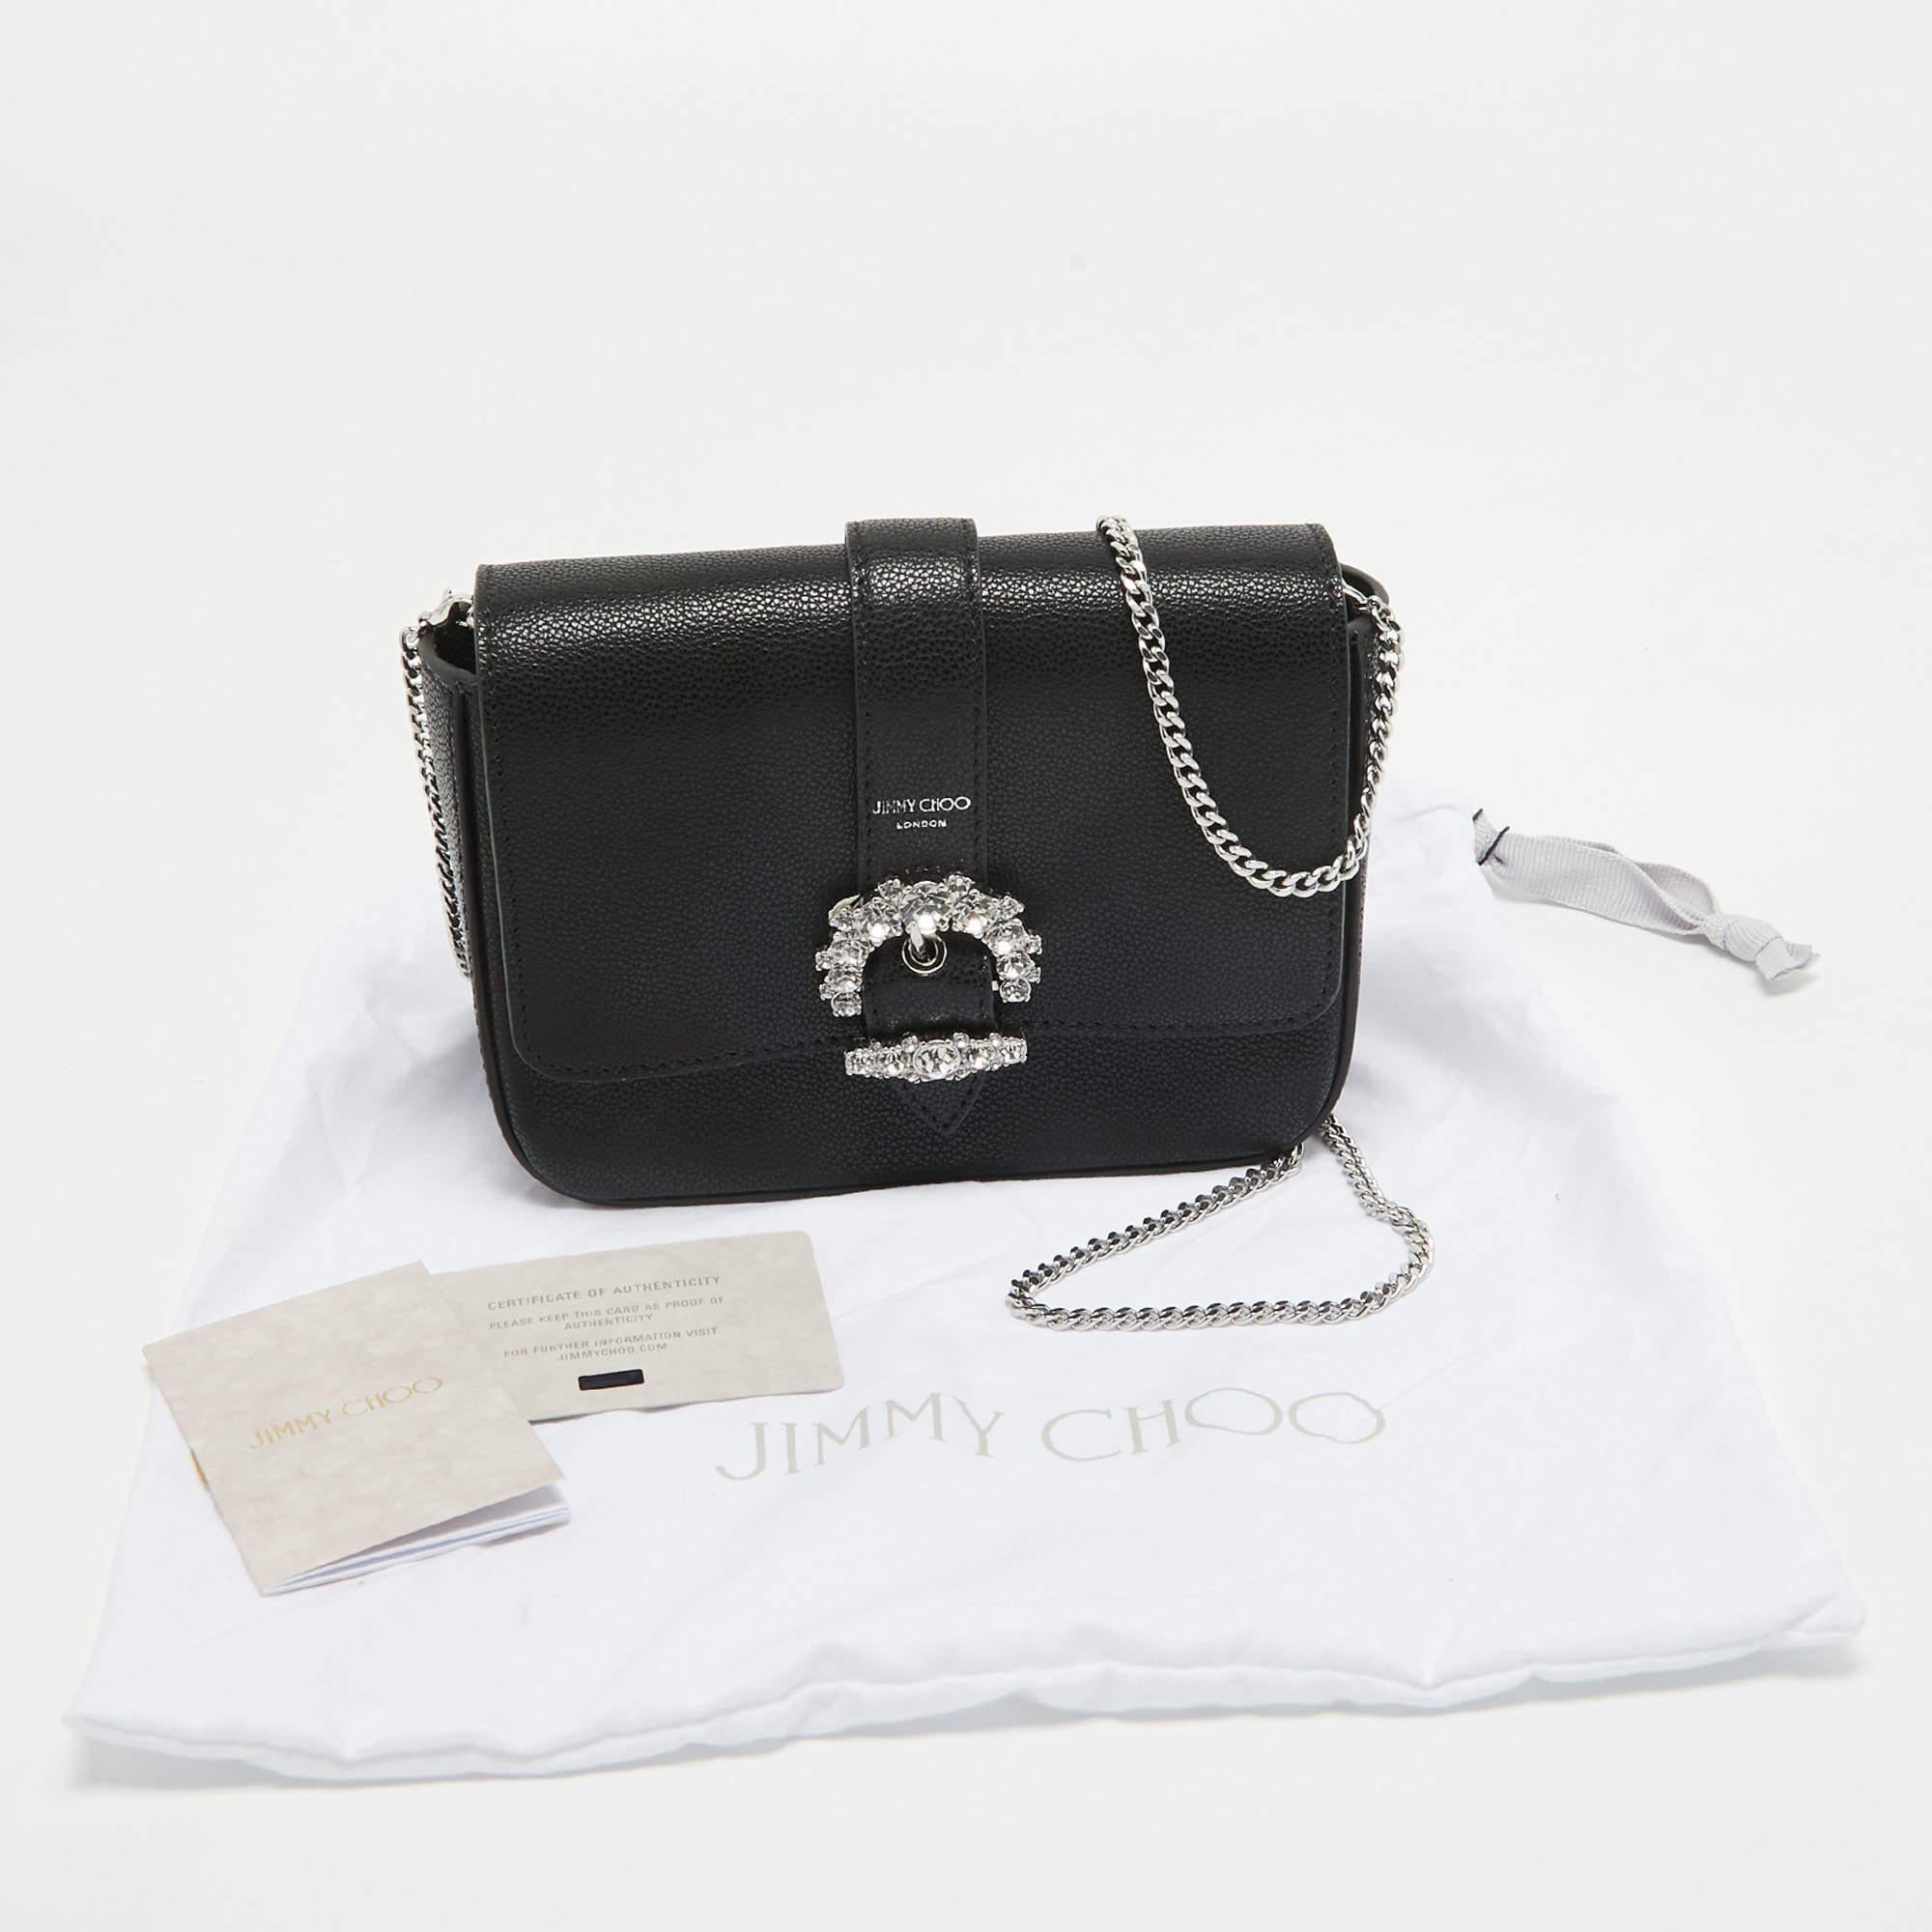 Jimmy Choo Black Leather Cheri Chain Shoulder Bag For Sale 8